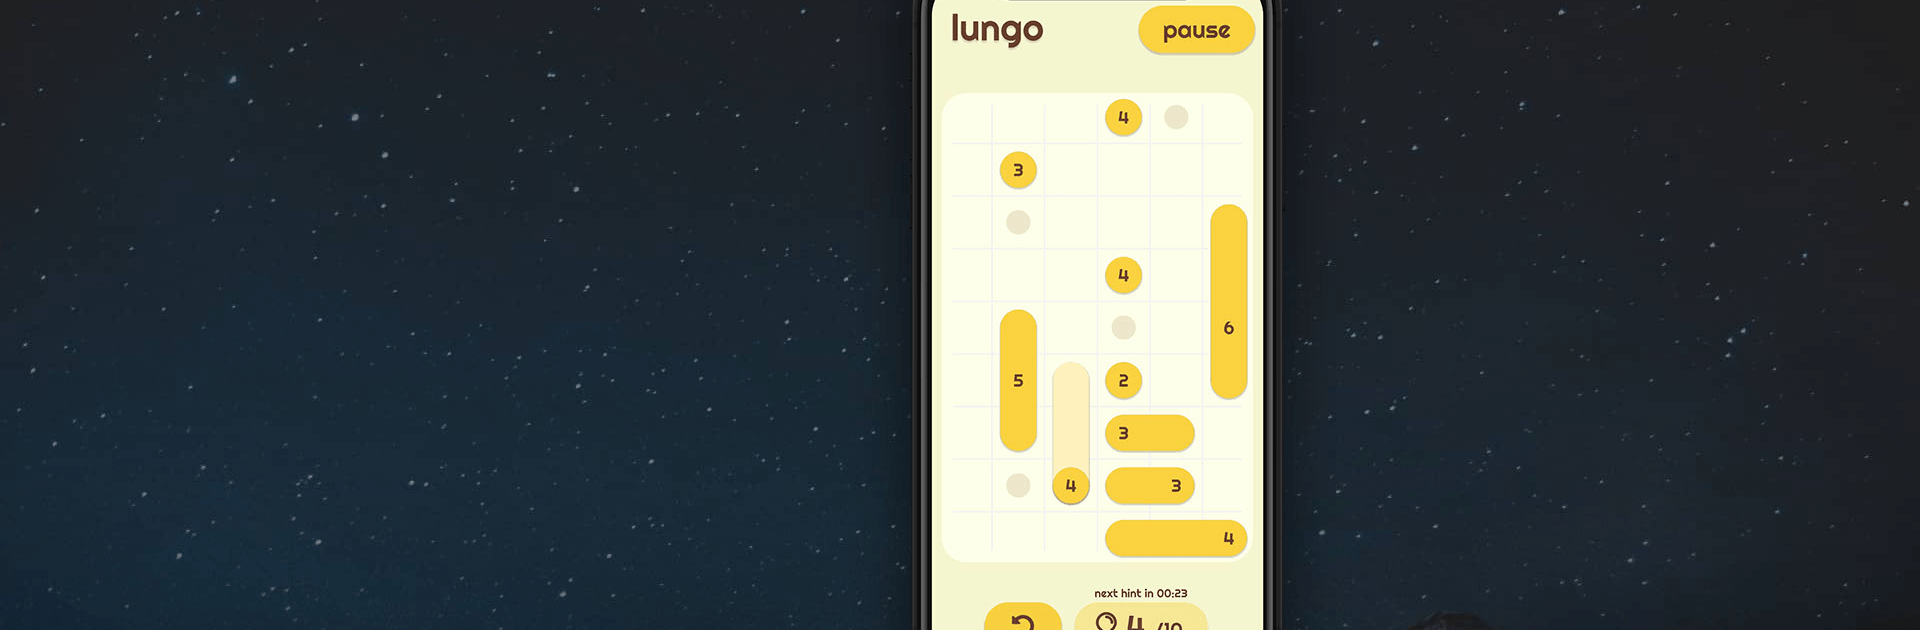 Lungo - Logic Game